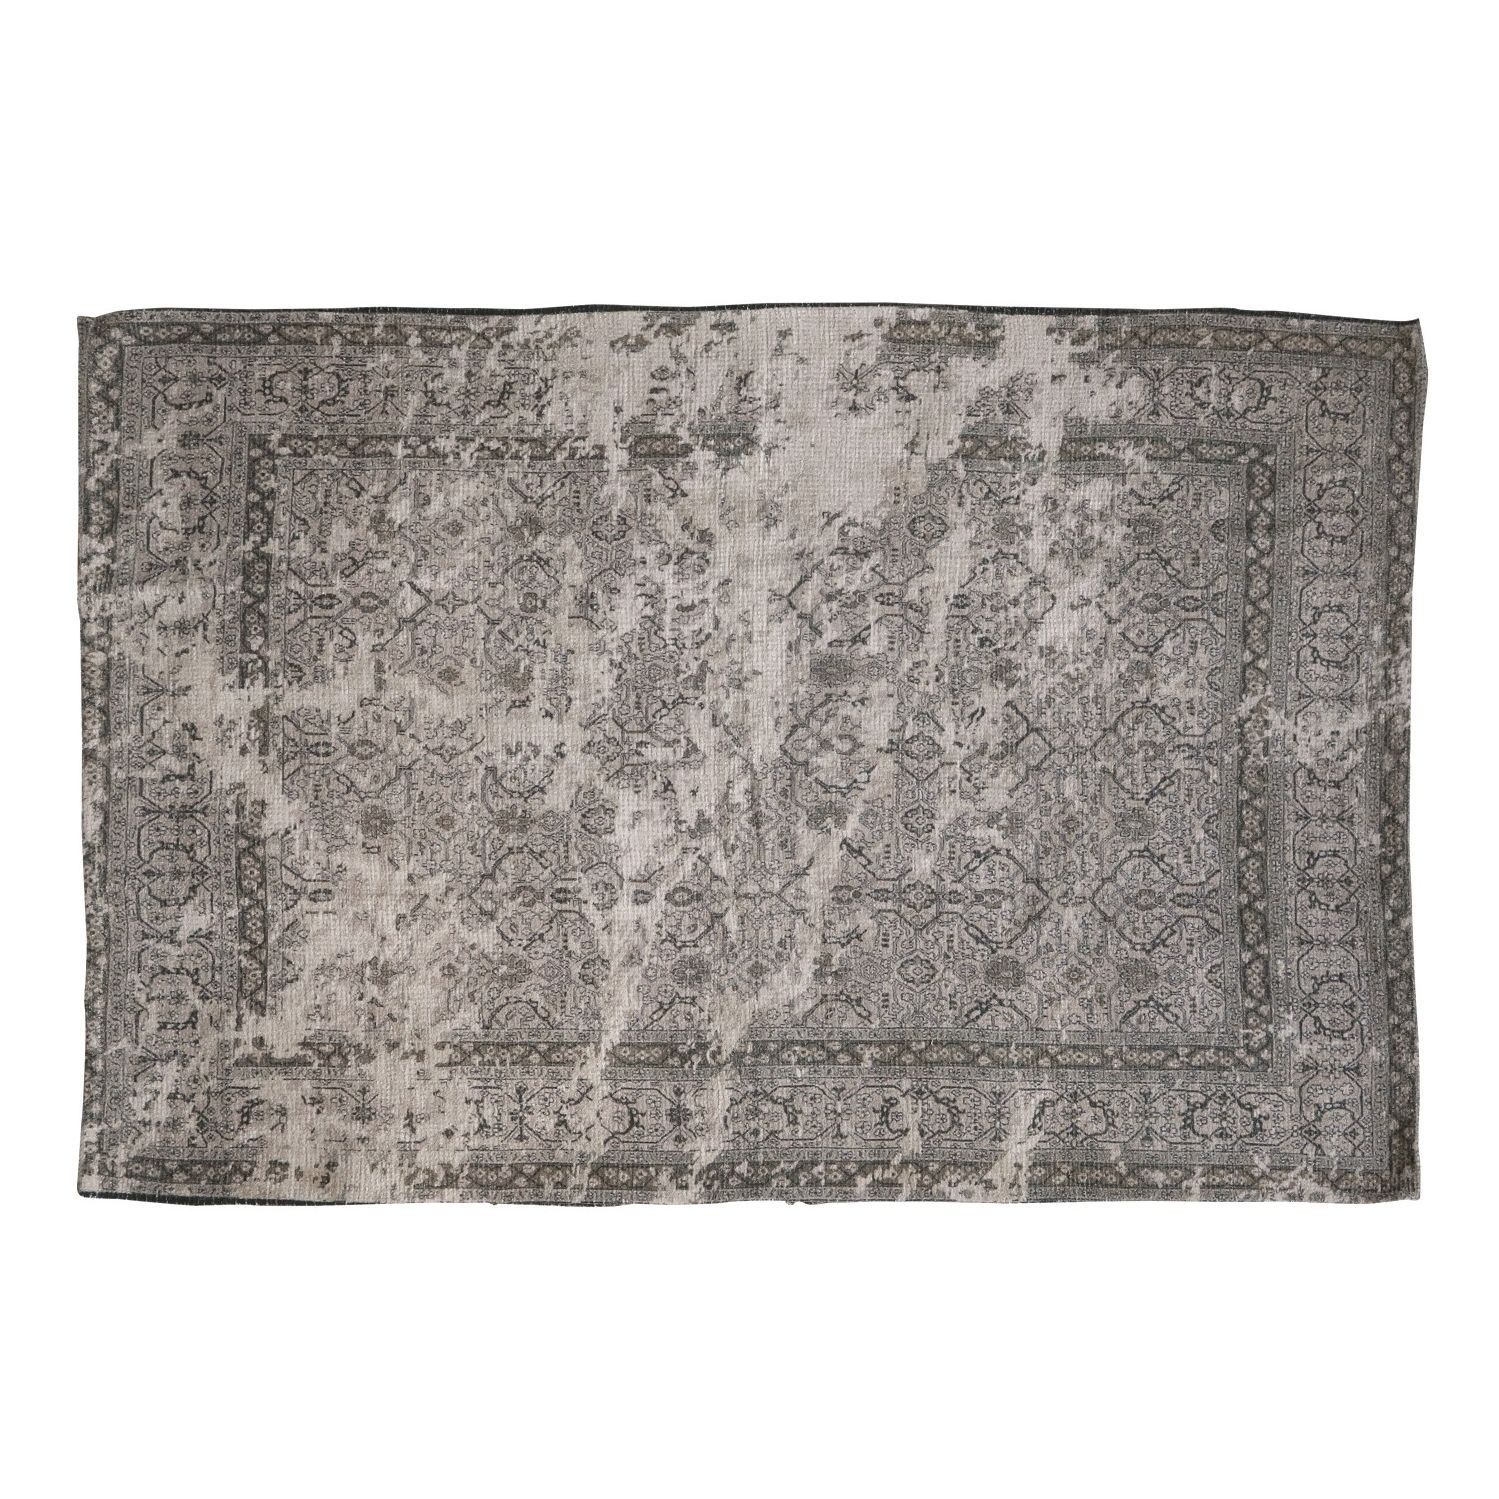 Mocca bavlněný koberec se vzorem French print - 180*120 cm Chic Antique